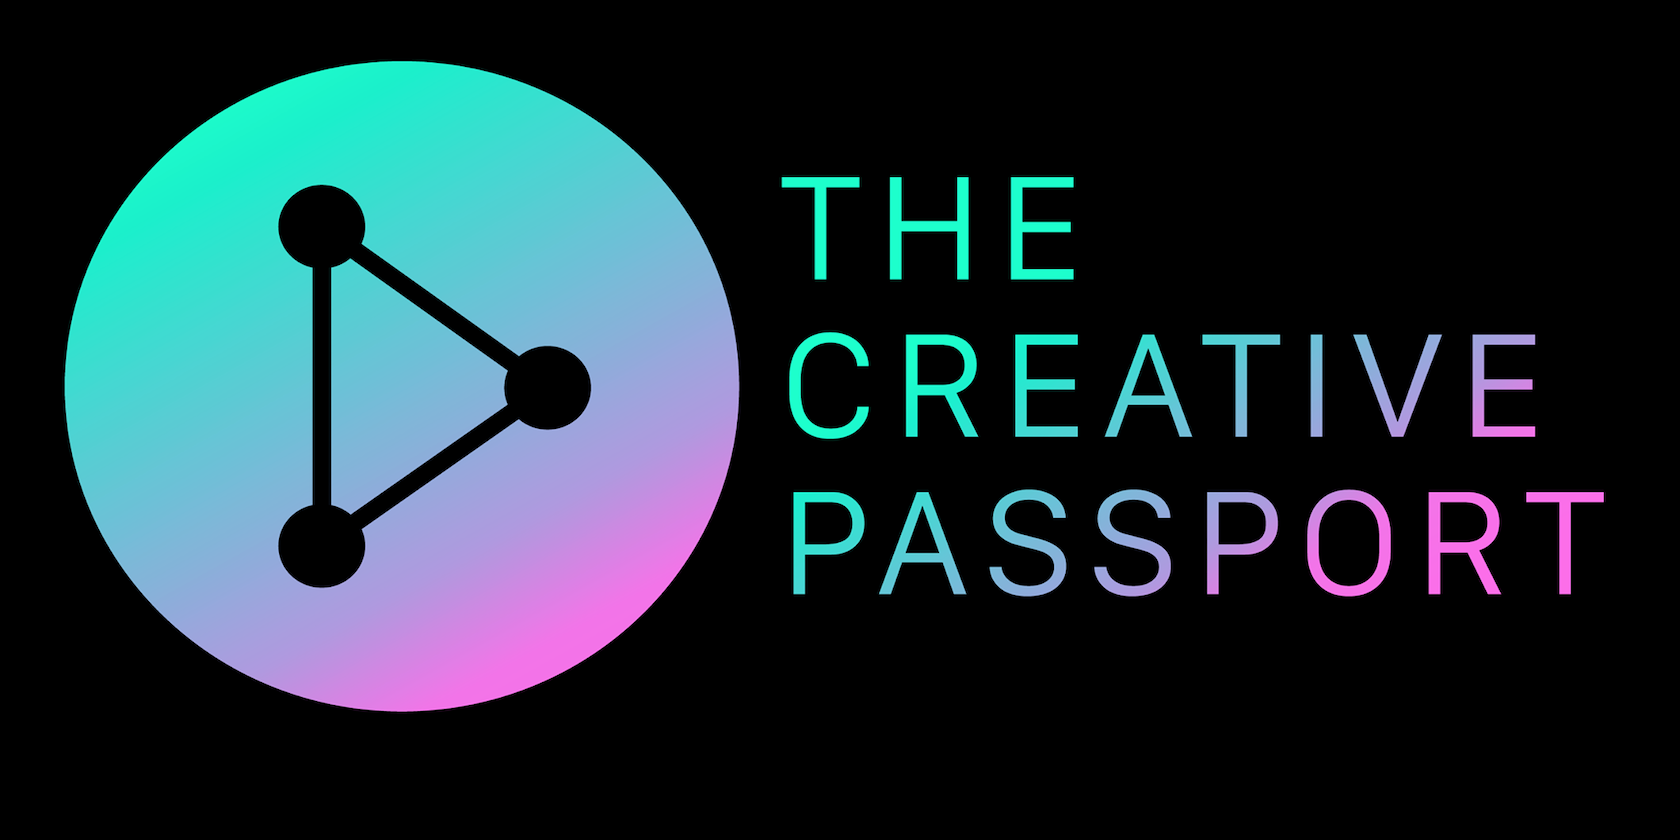 The Creative Passport logo